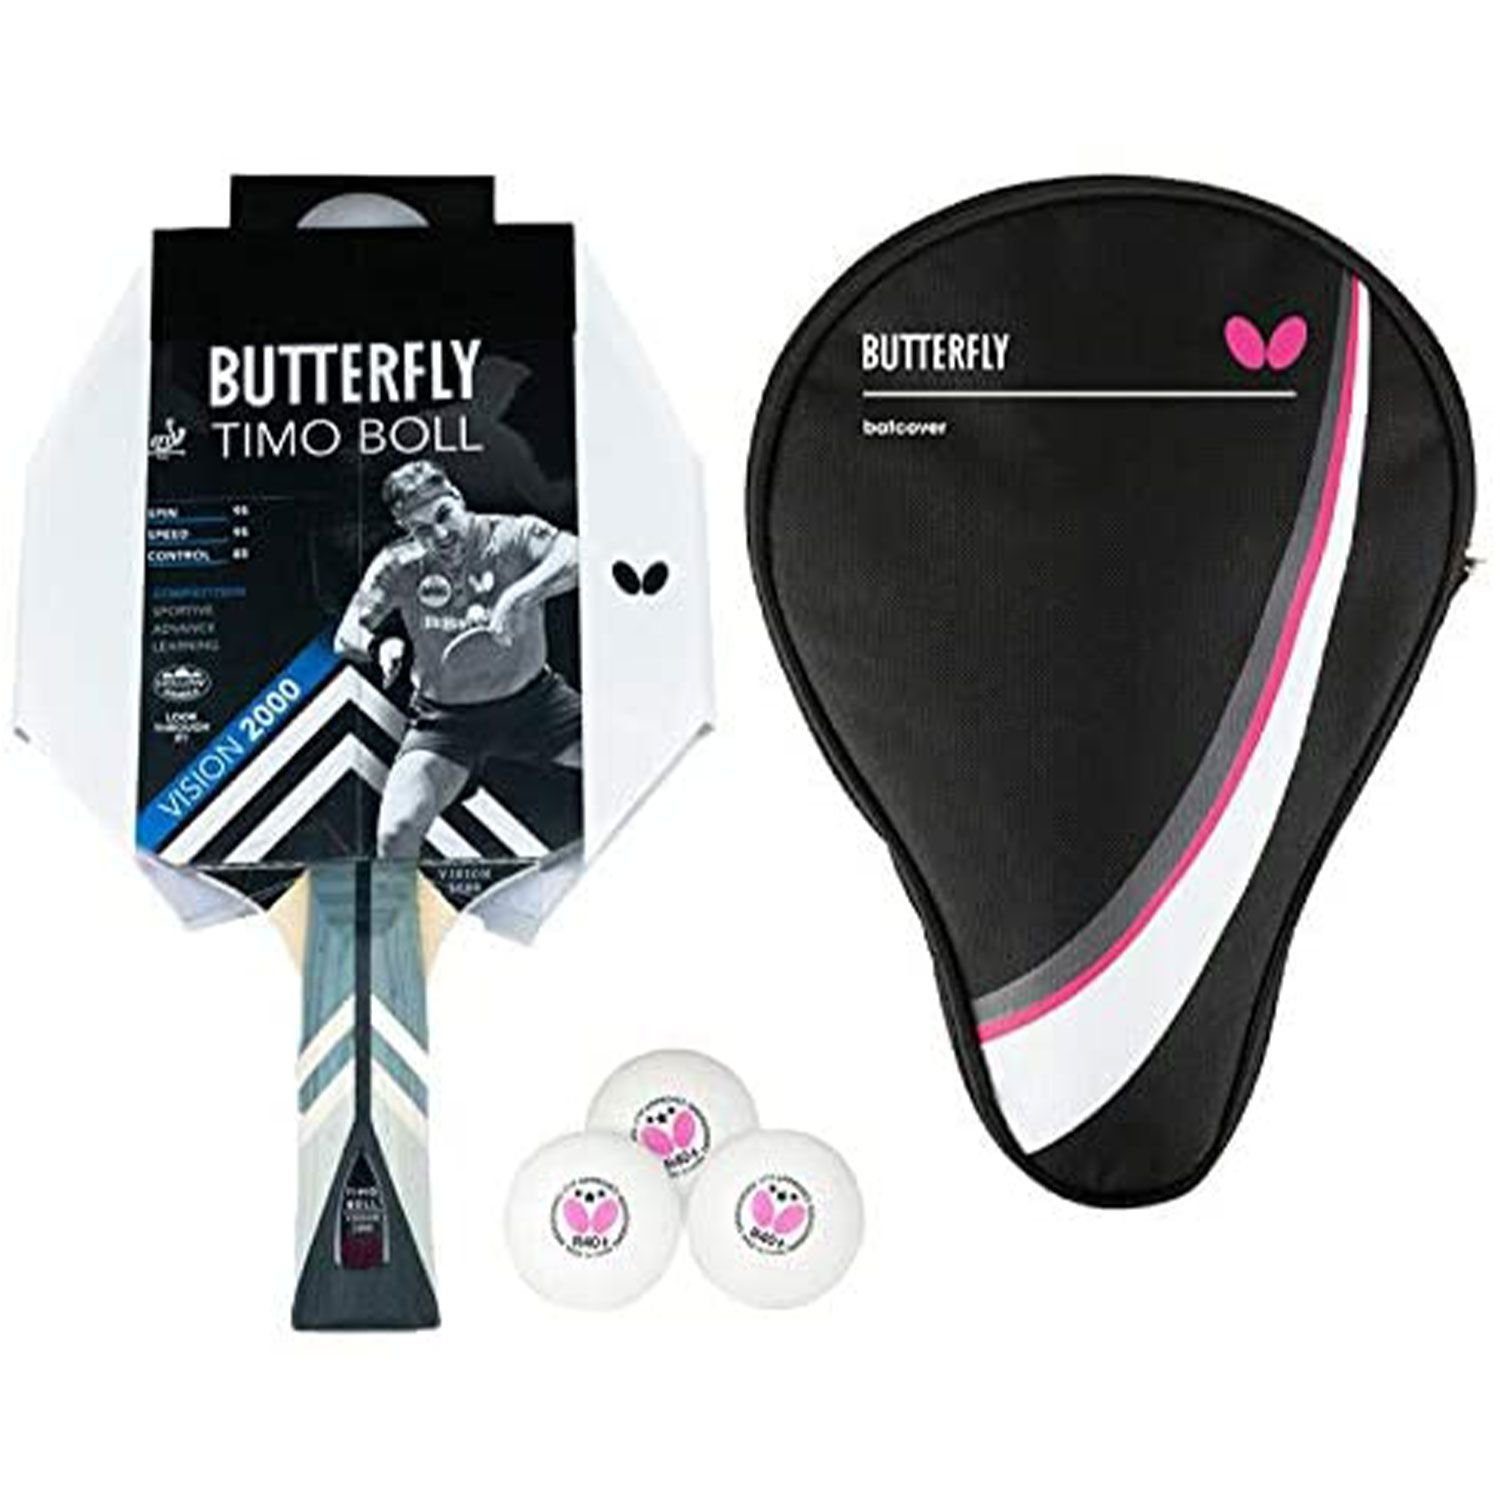 Butterfly Tischtennisschläger 1x Timo Boll Vision 2000 + Drive Case 1 + Bälle, Tischtennis Schläger Set Tischtennisset Table Tennis Bat Racket